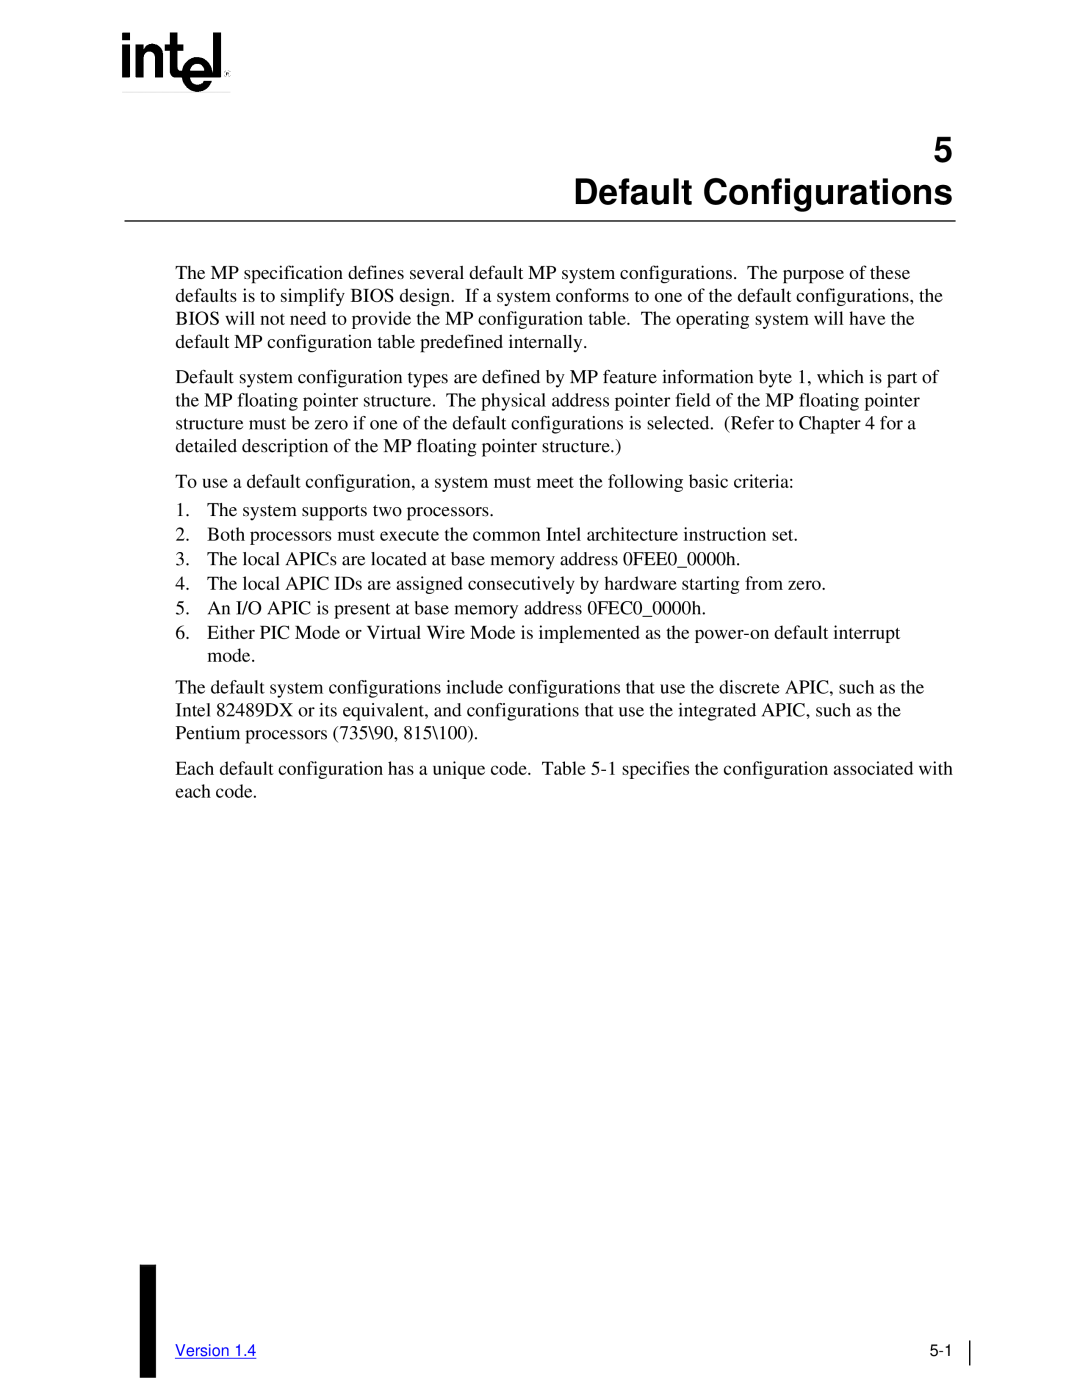 Intel MultiProcessor manual Default Configurations 